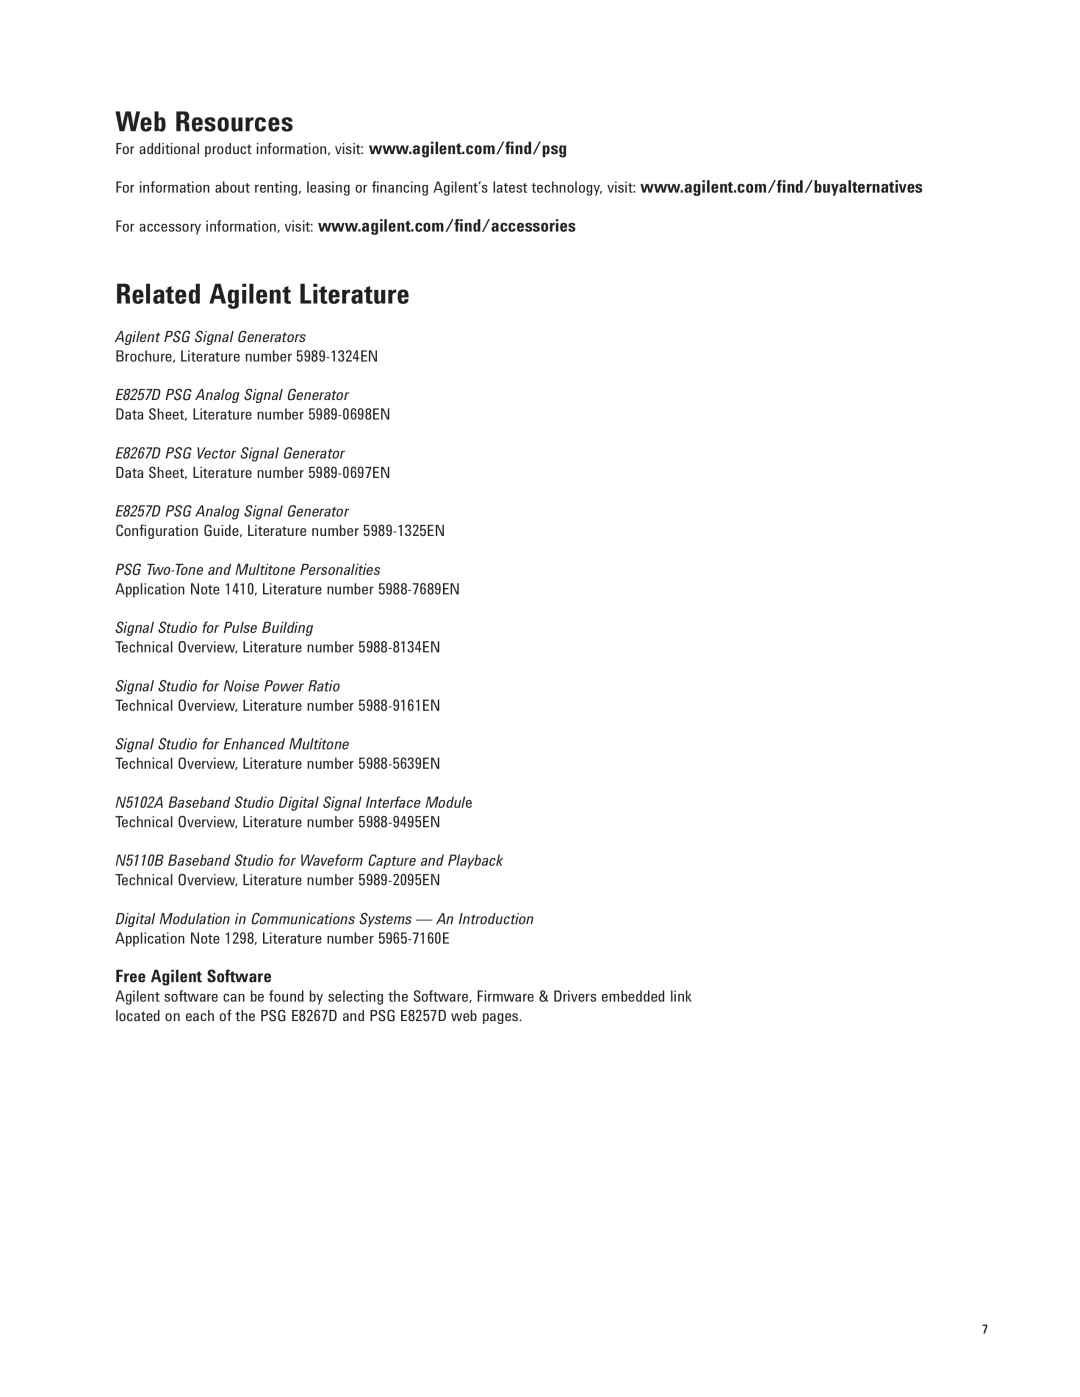 Agilent Technologies E8267D manual Web Resources, Related Agilent Literature, Free Agilent Software 